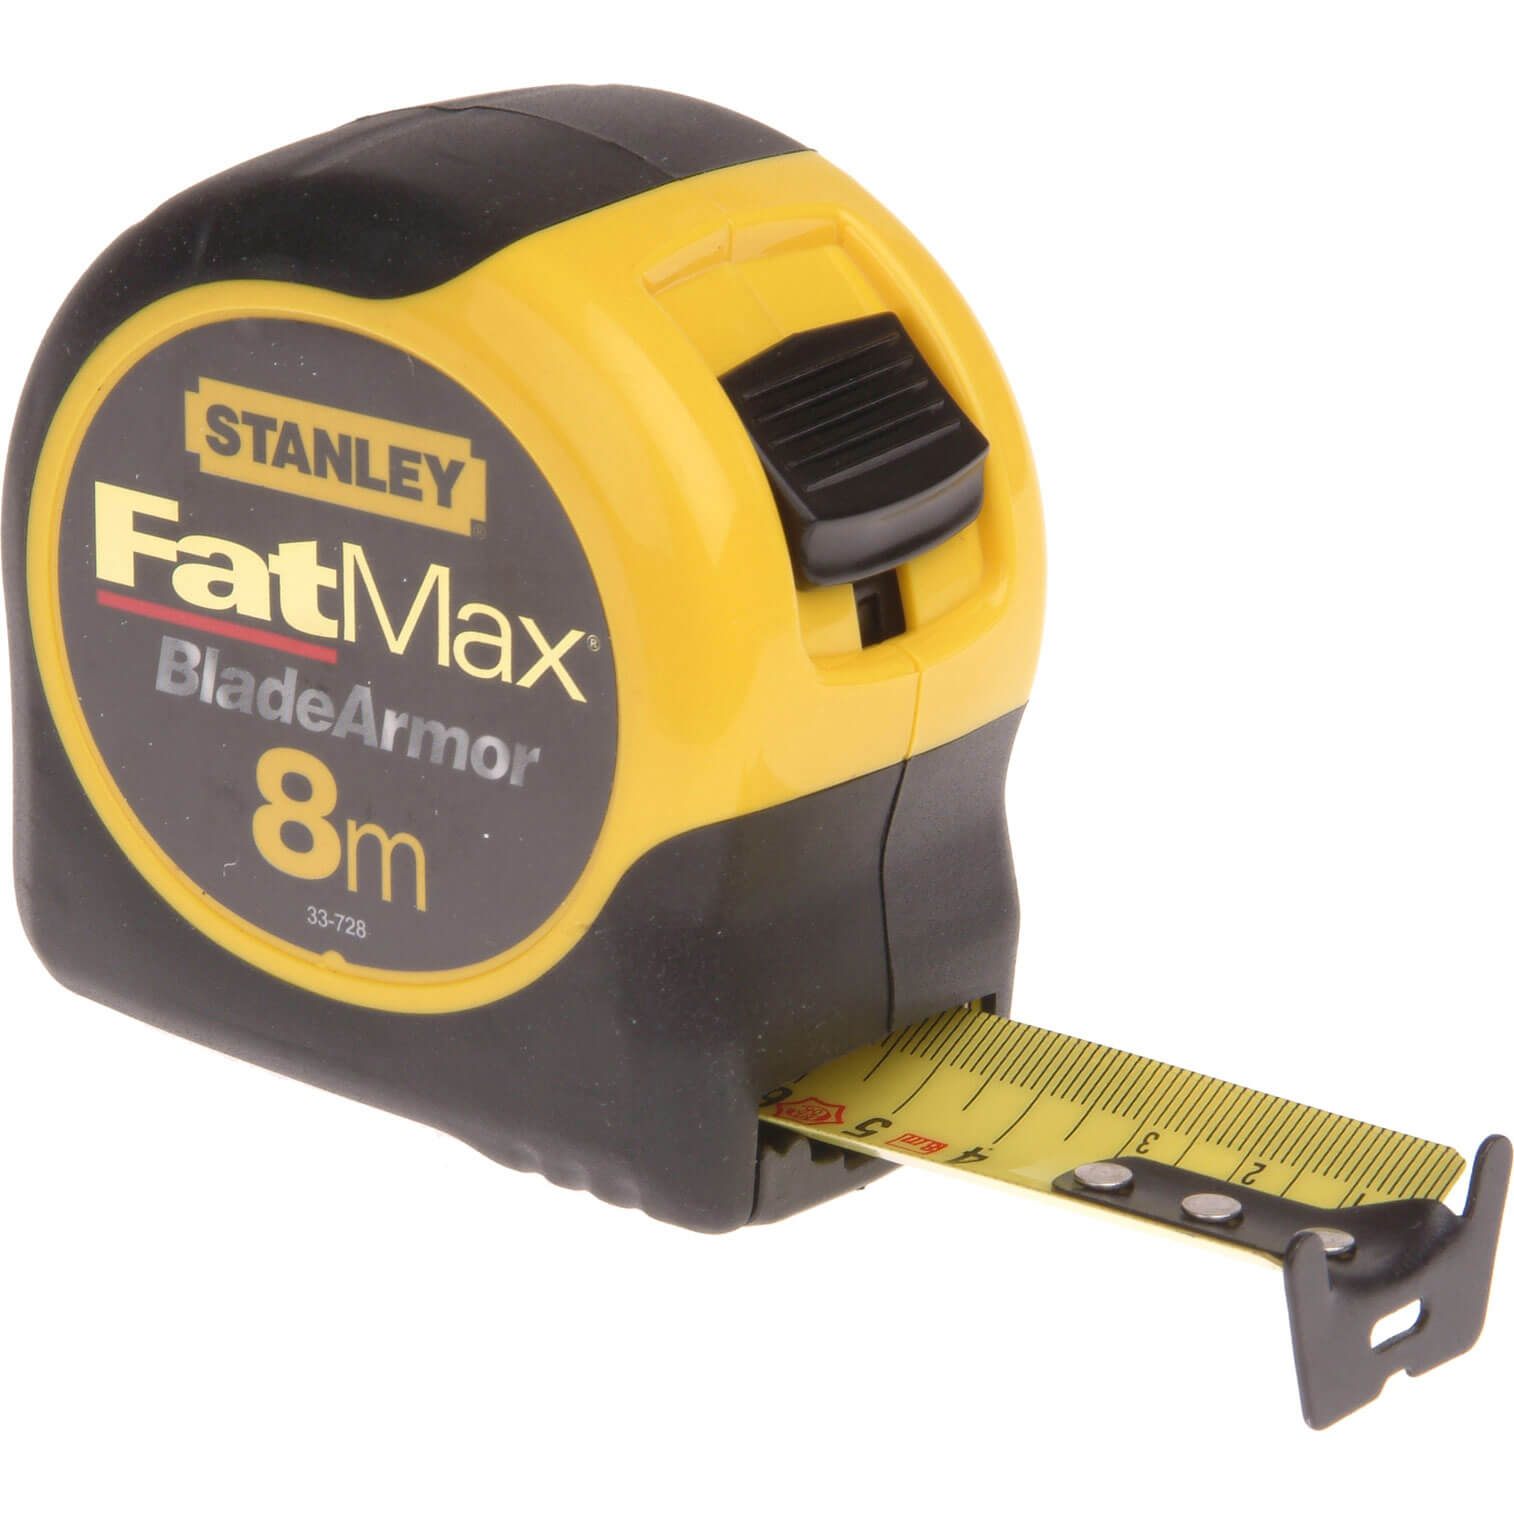 Image of Stanley Fatmax Blade Armor Tape Measure Metric 8m 32mm